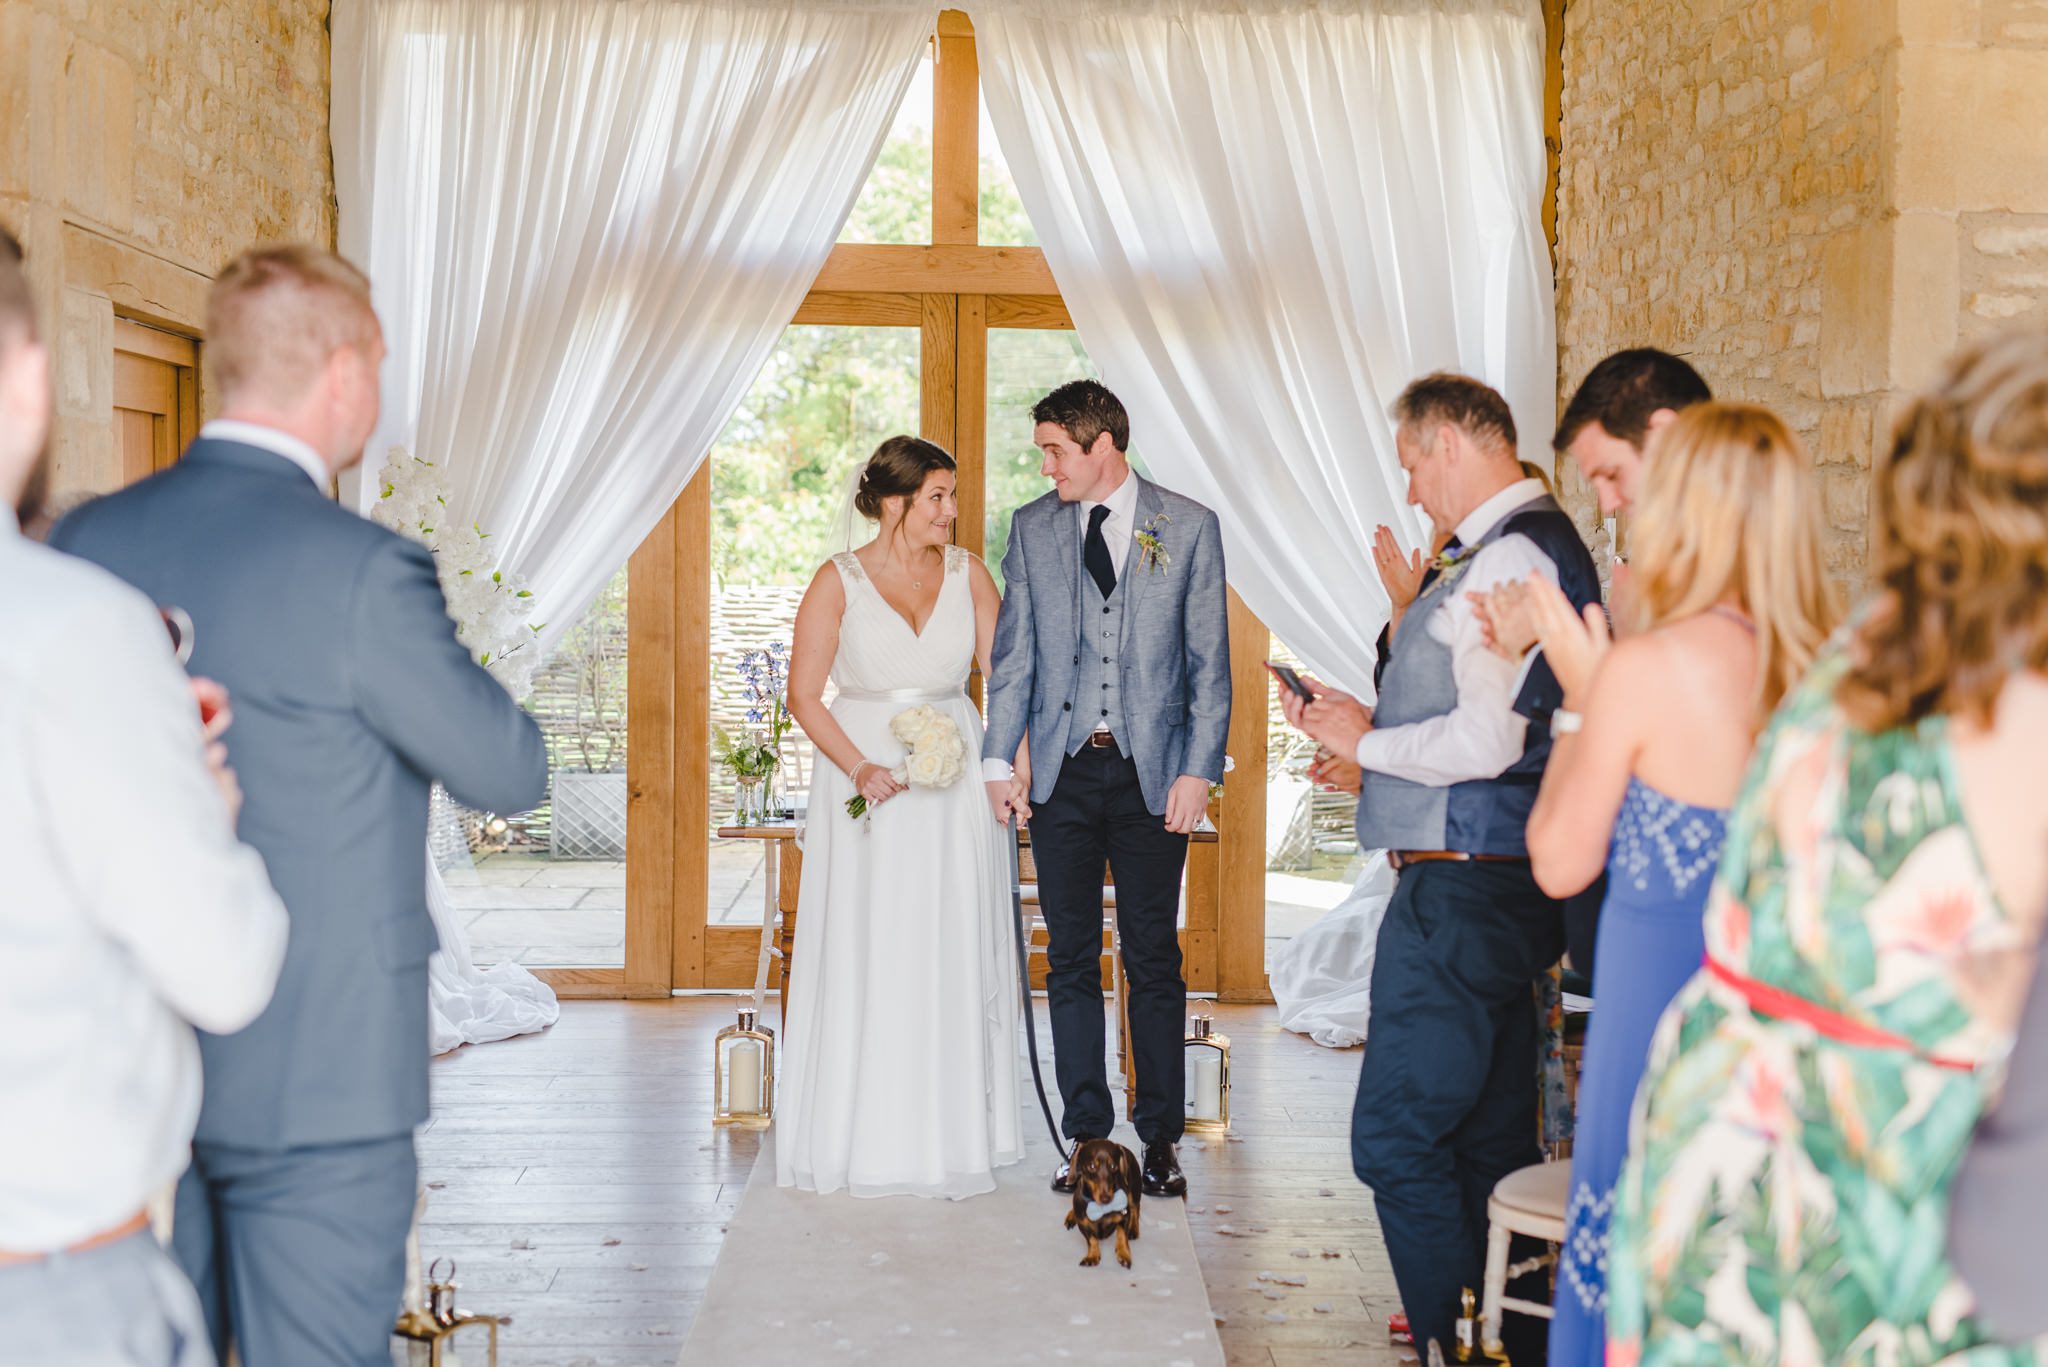 A wedding ceremony at Upcote Barn